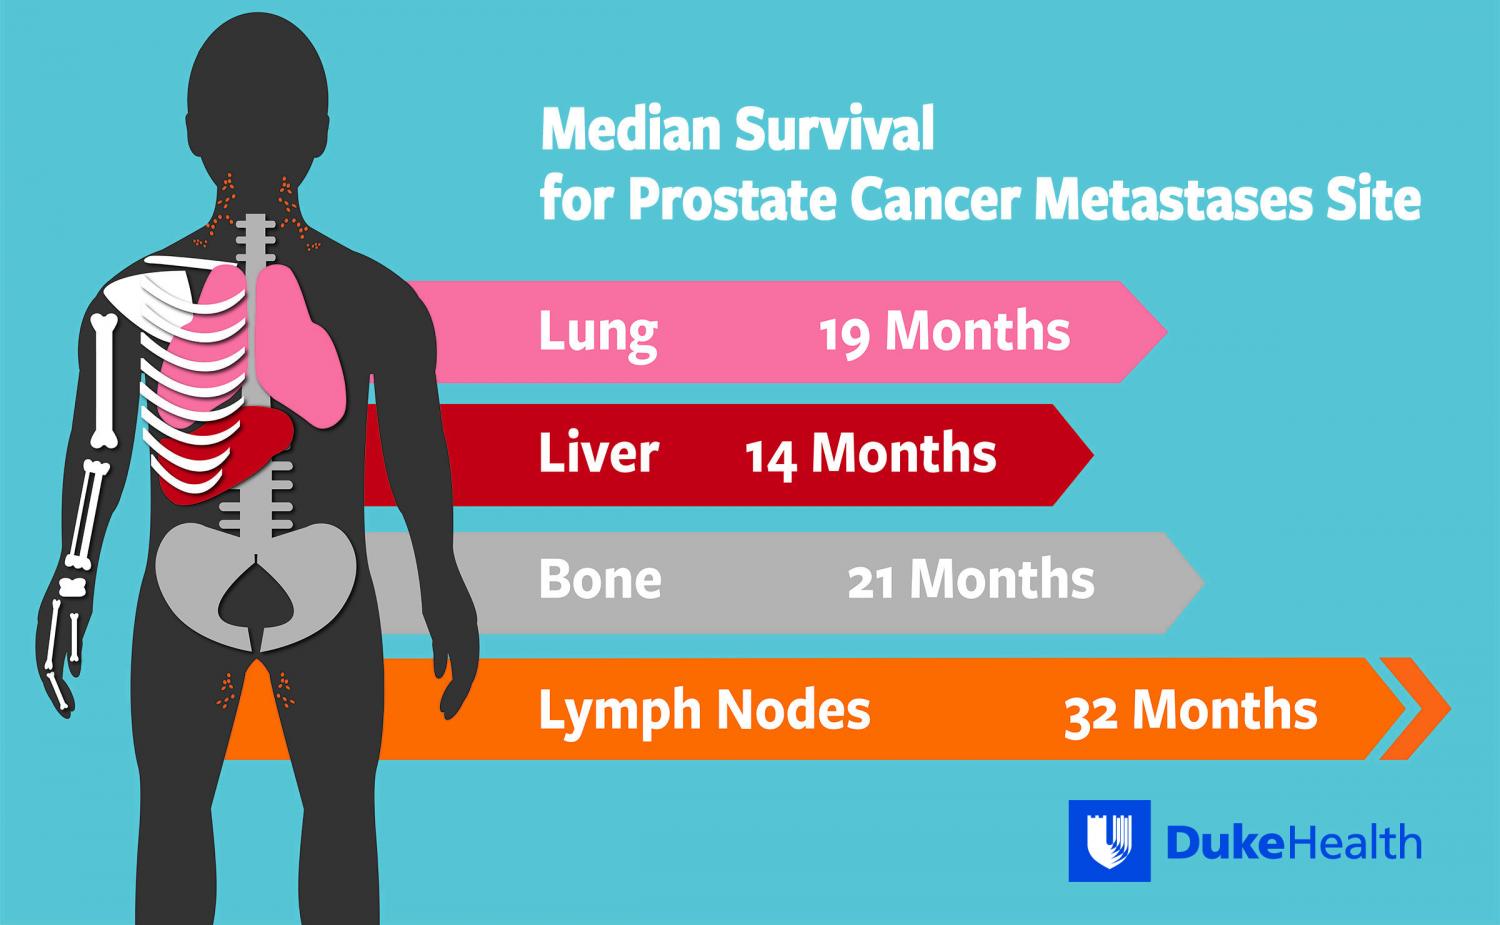 prostate cancer metastasis sites